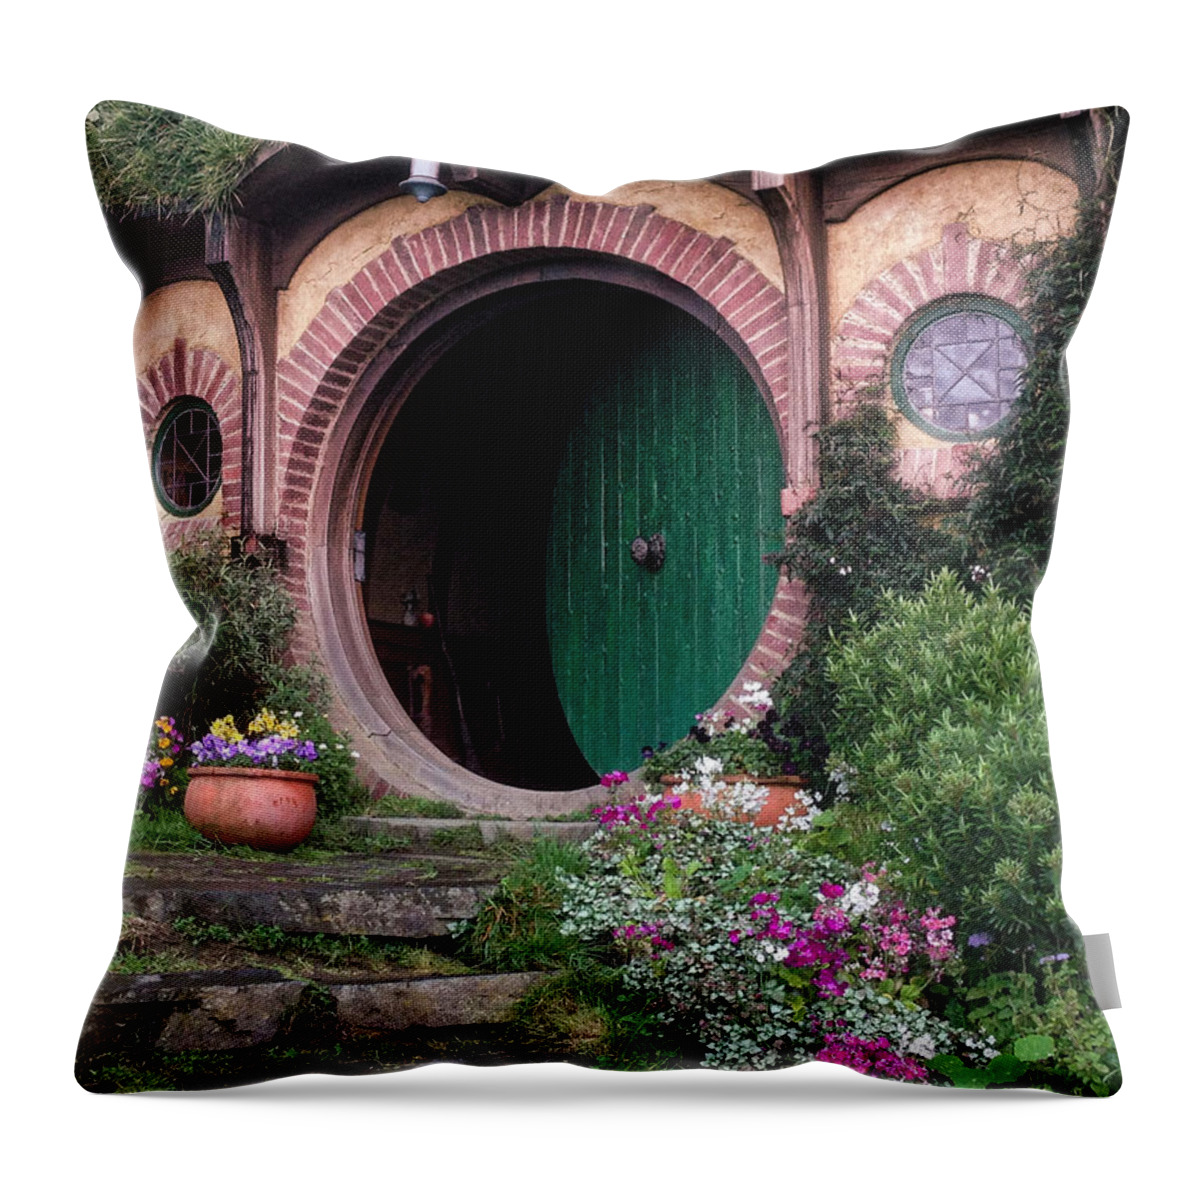 Photograph Throw Pillow featuring the photograph Hobbit House by Richard Gehlbach